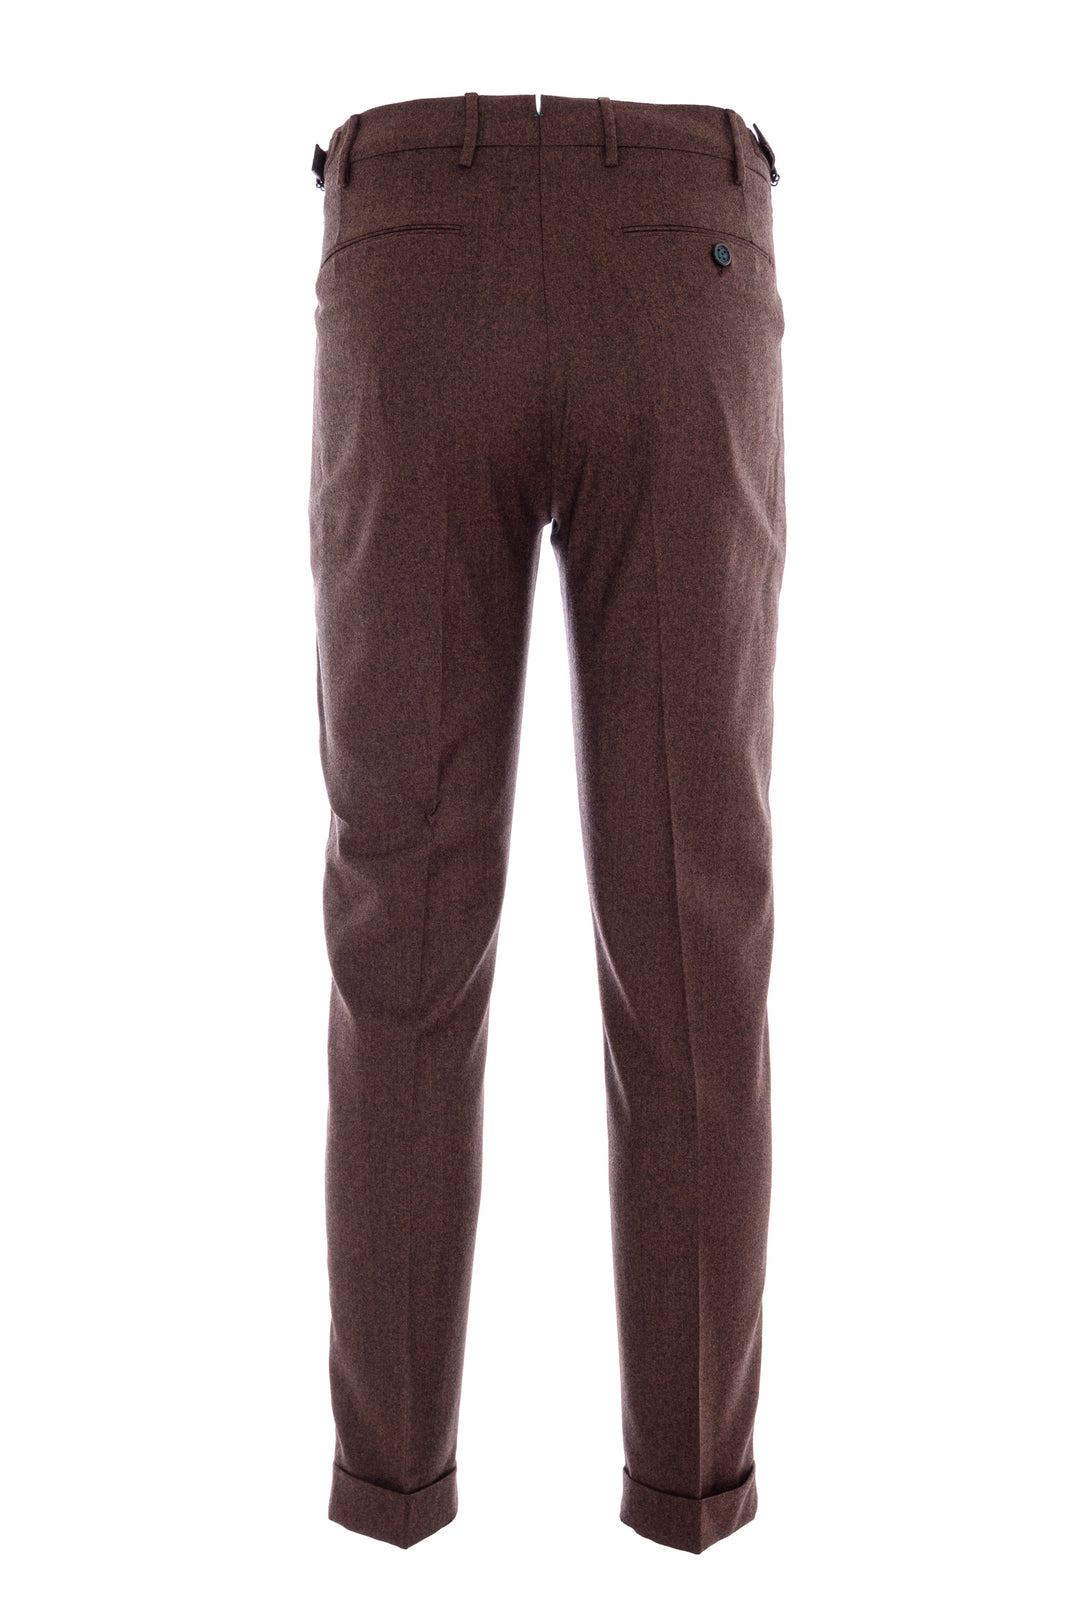 BERWICH Pantalone retro ruggine in lana vergine stretch con una pince - Mancinelli 1954